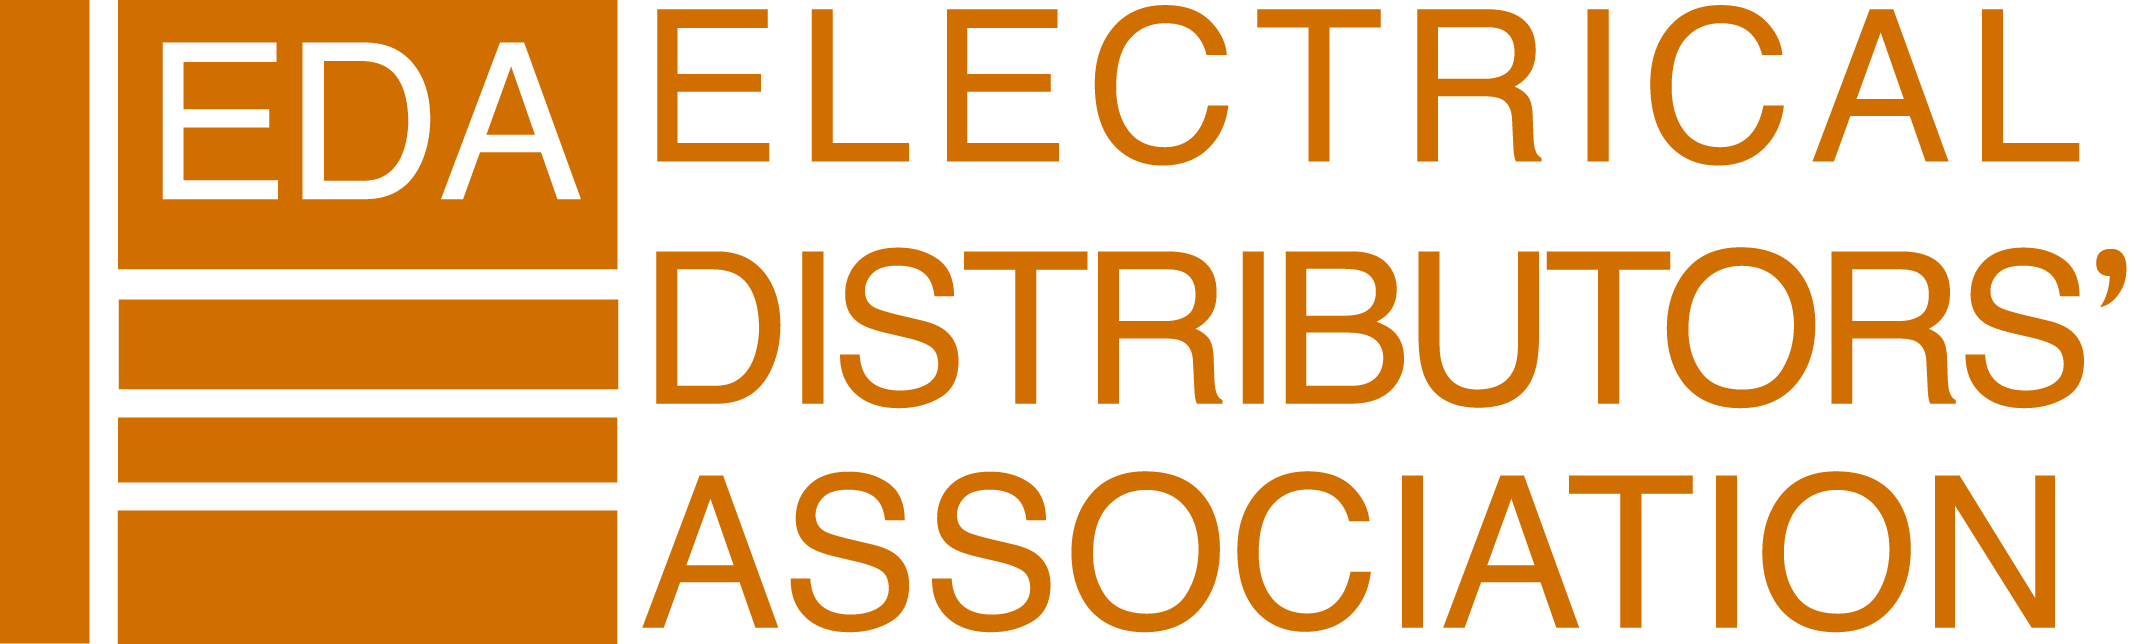 Electrical Distributors Association logo